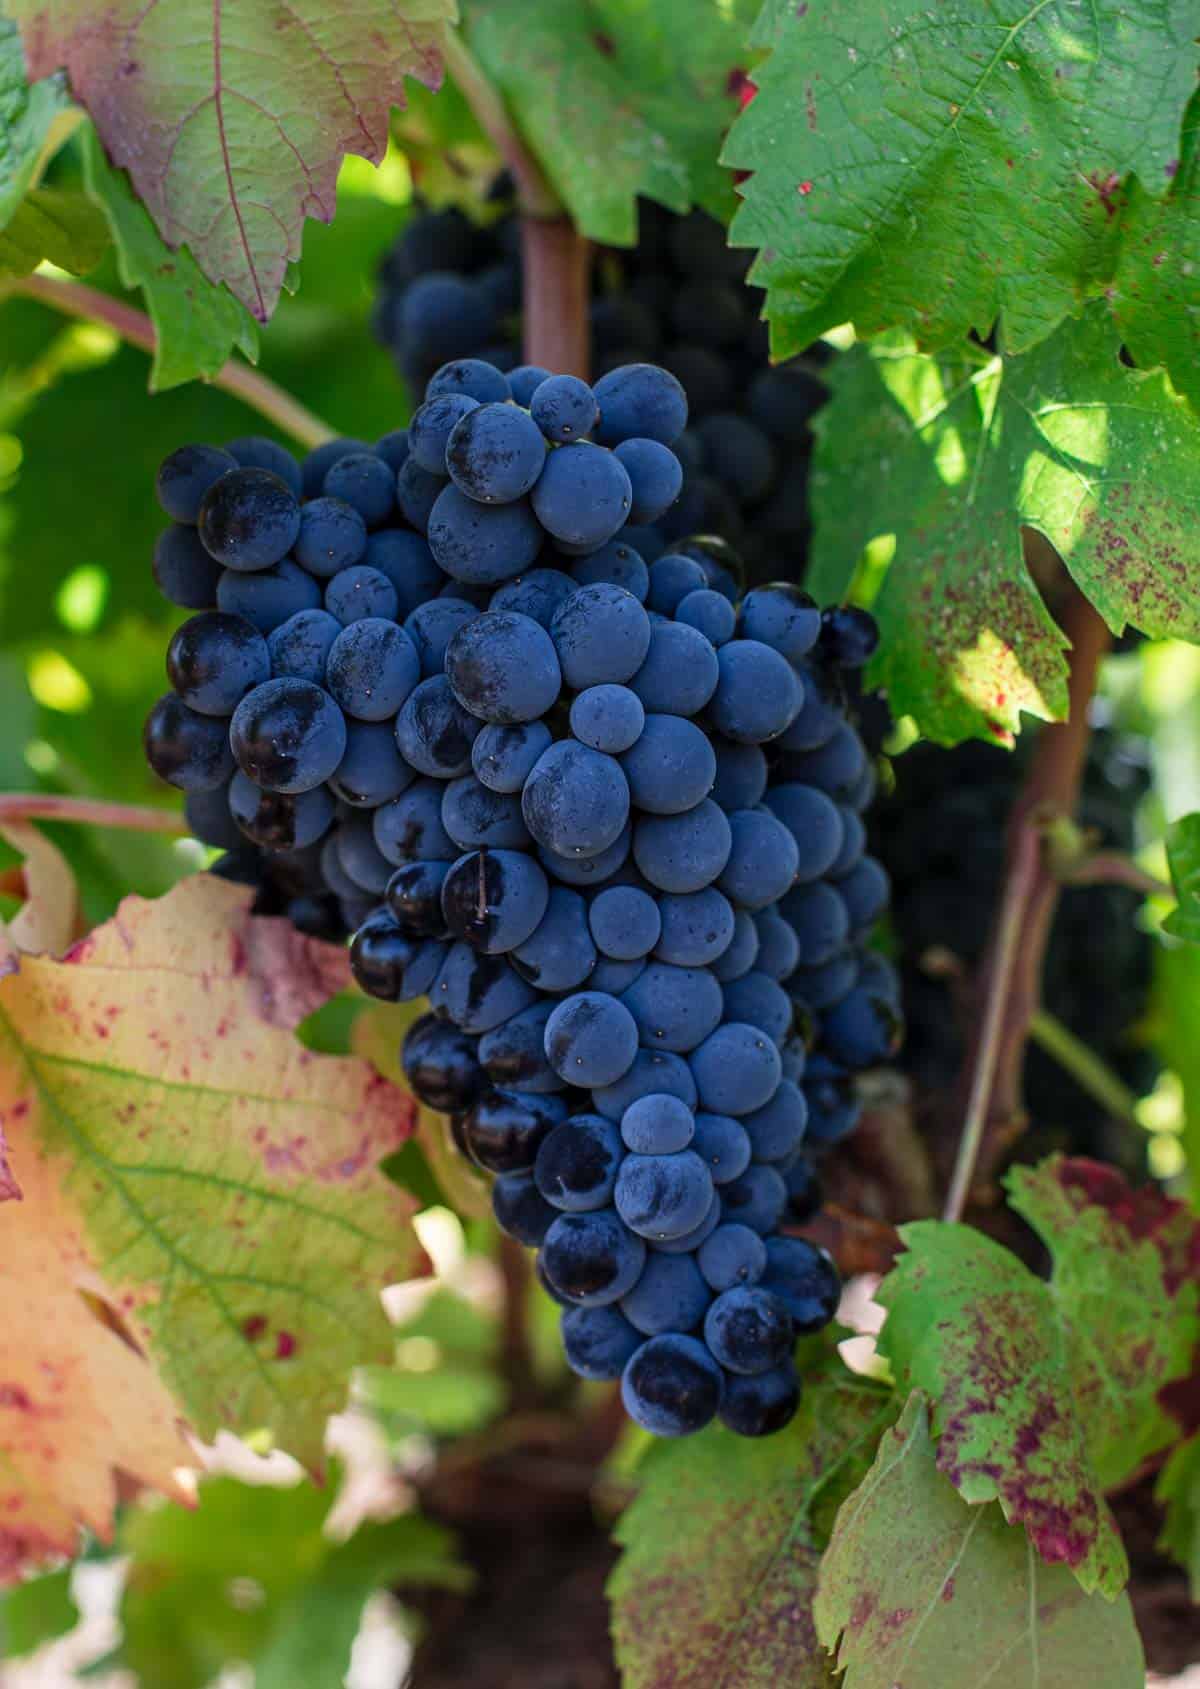 Nerello Cappuccio grape bunch hanging on a vine just before harvest